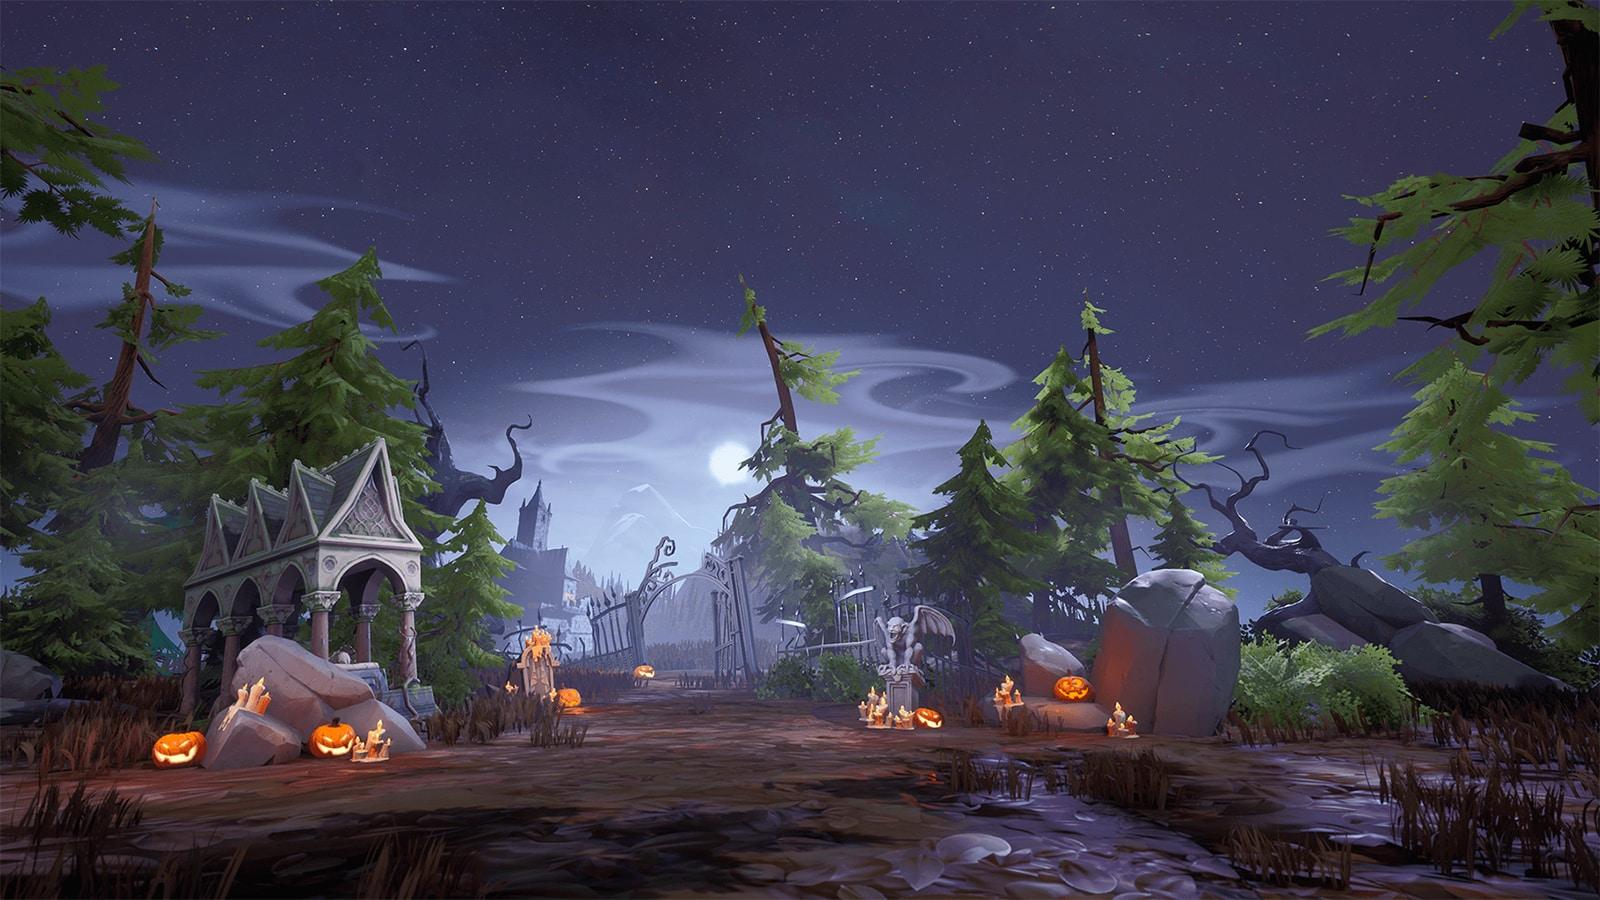 The new Halloween lobby in Fortnite Season 8